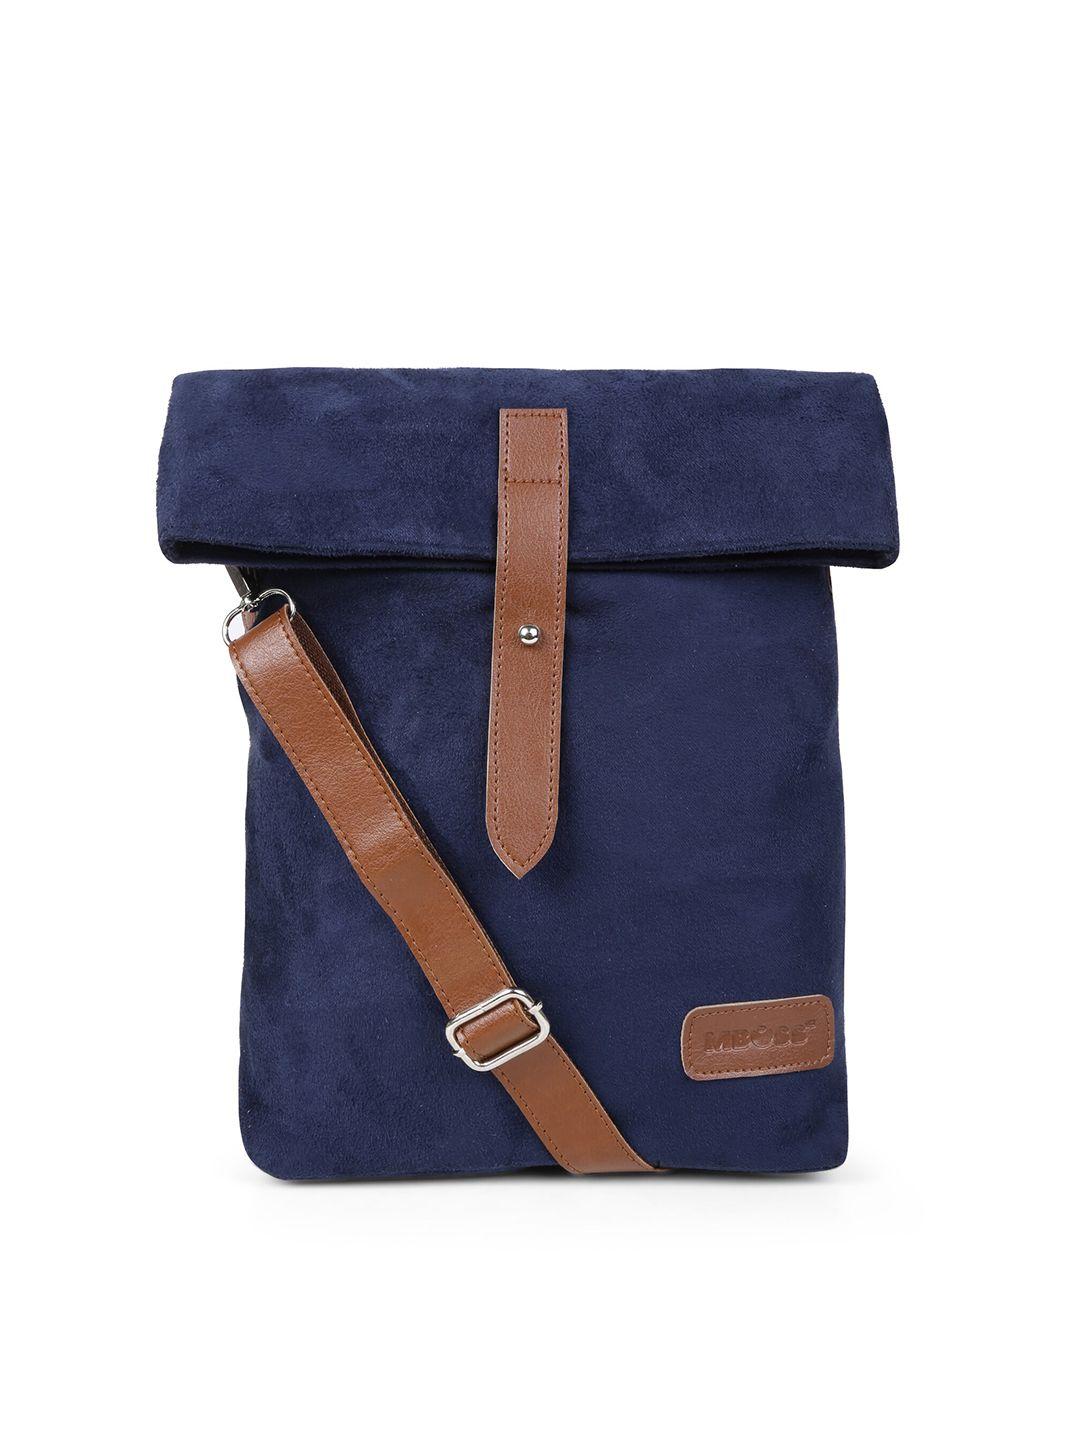 mboss unisex blue solid messenger bag